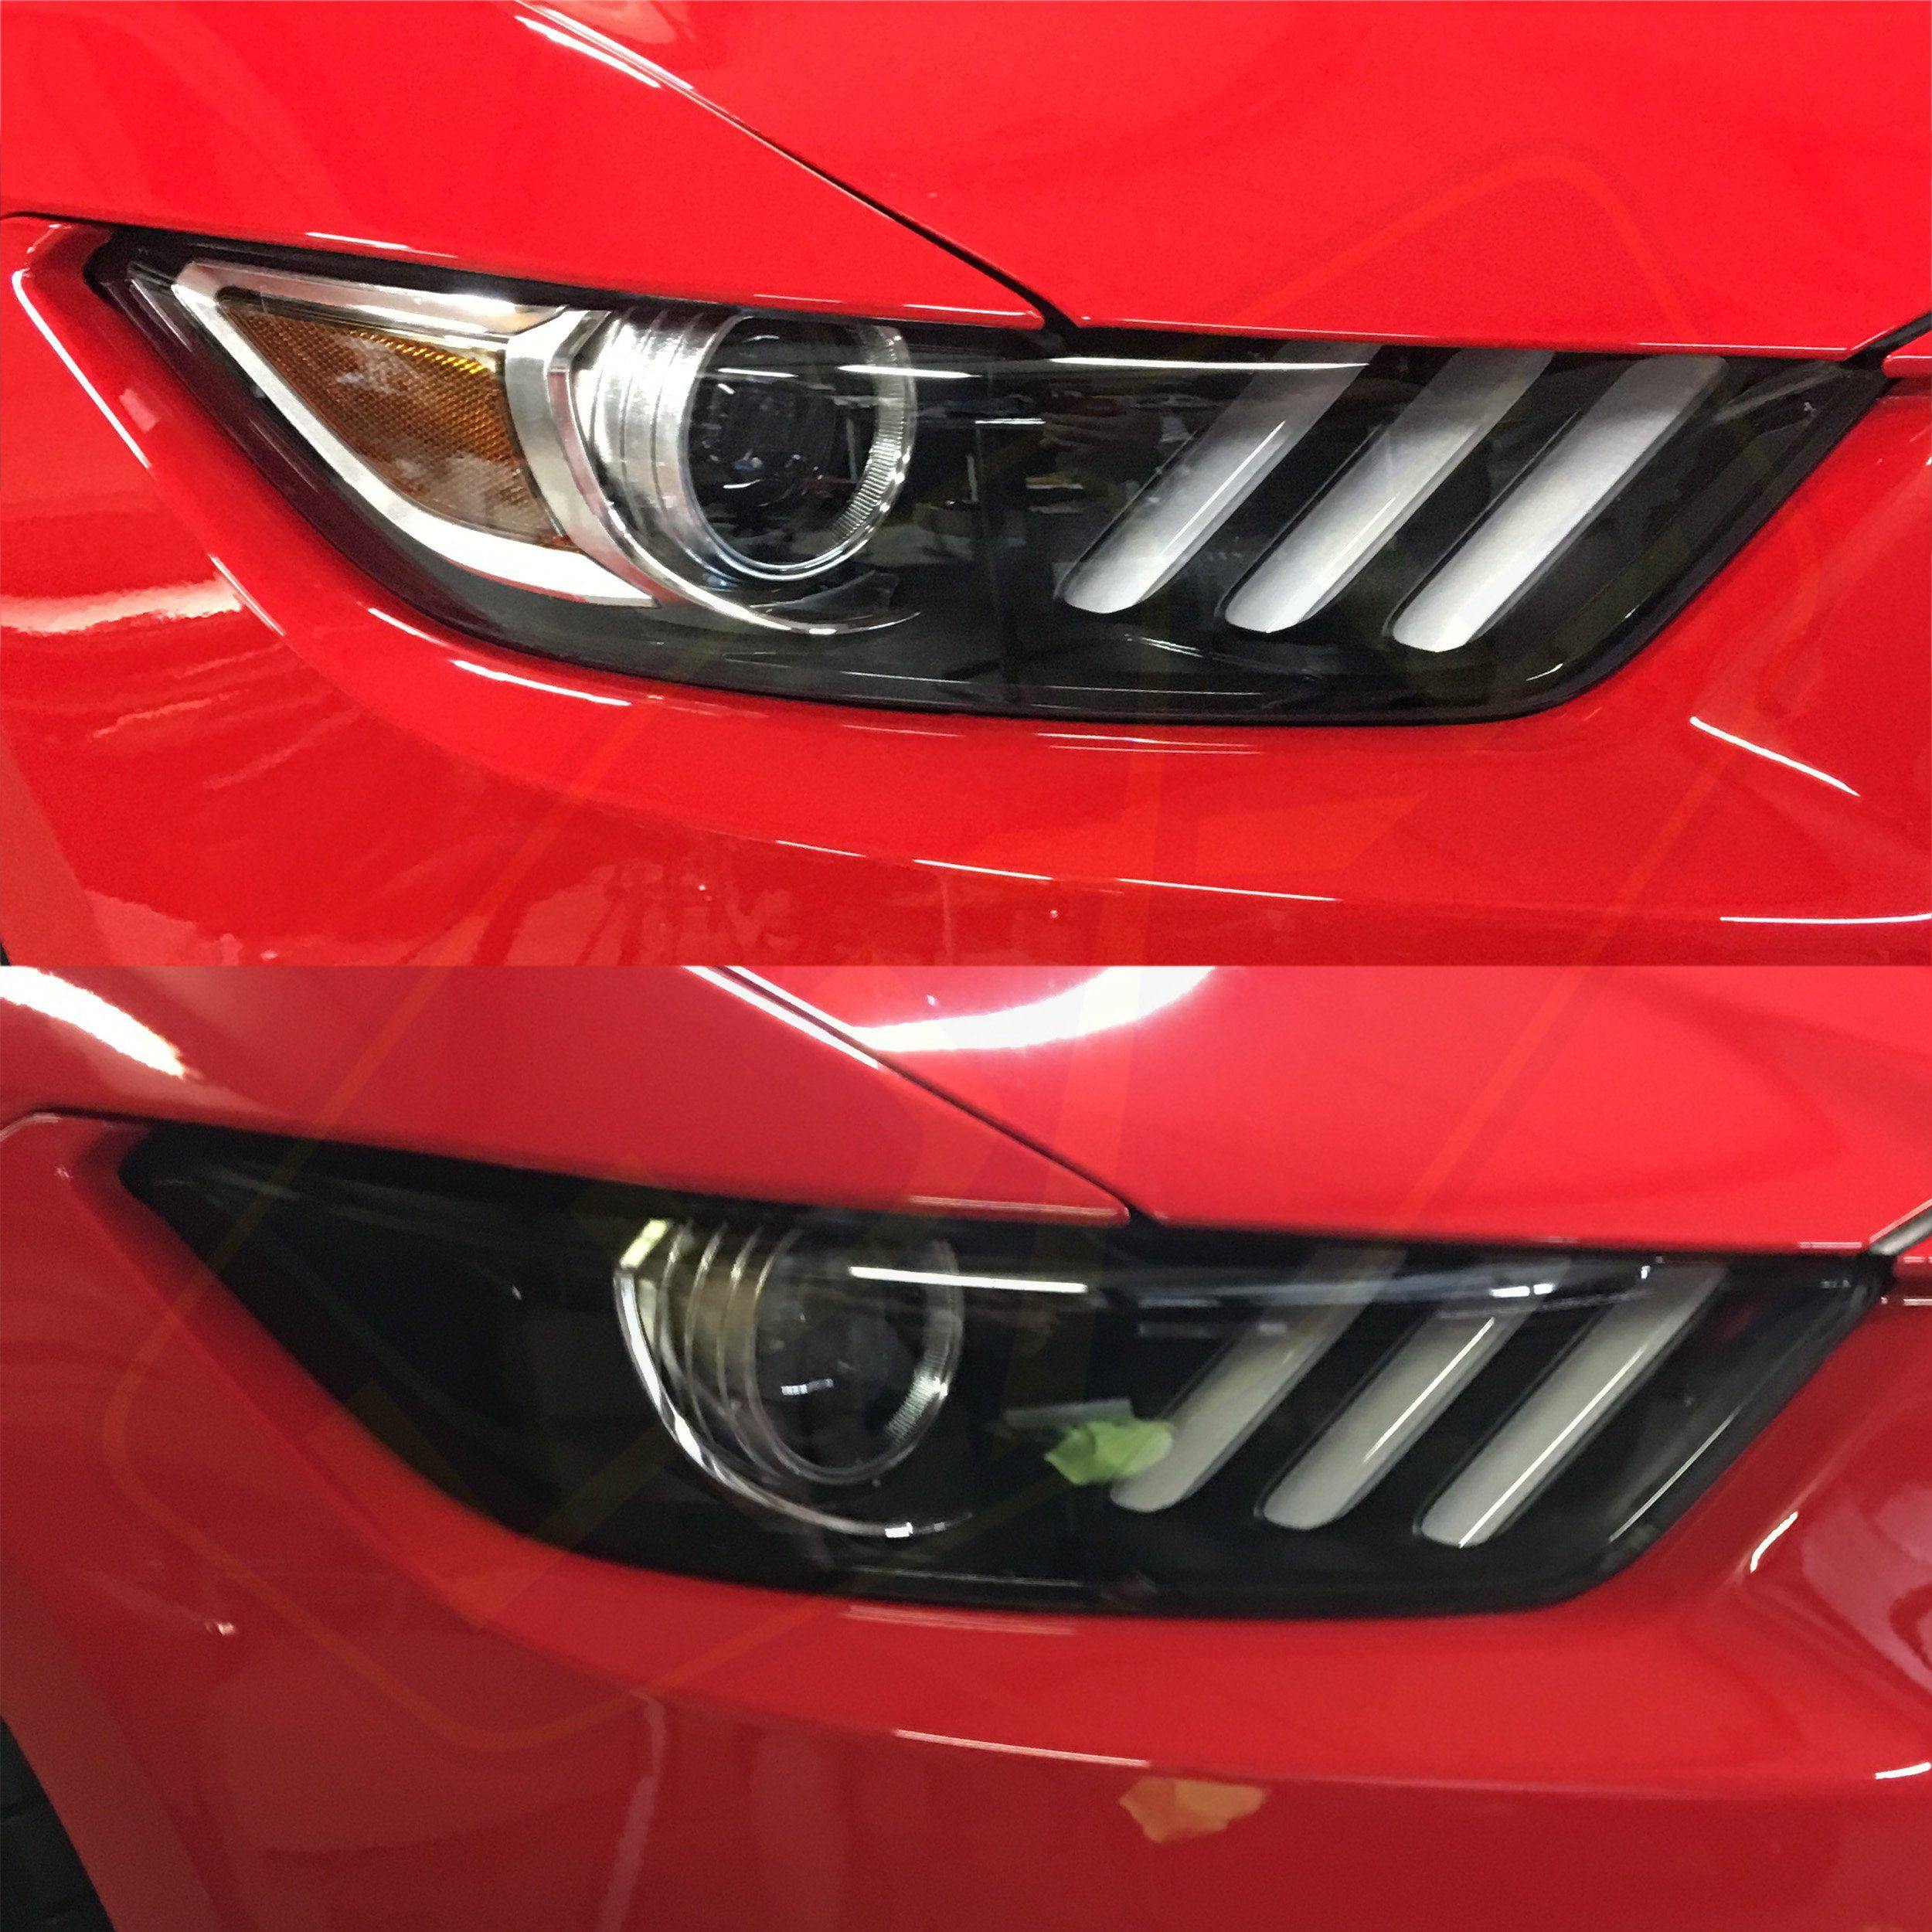 Crux Motorsports 2015 – 2017 Ford Mustang Headlight Tint